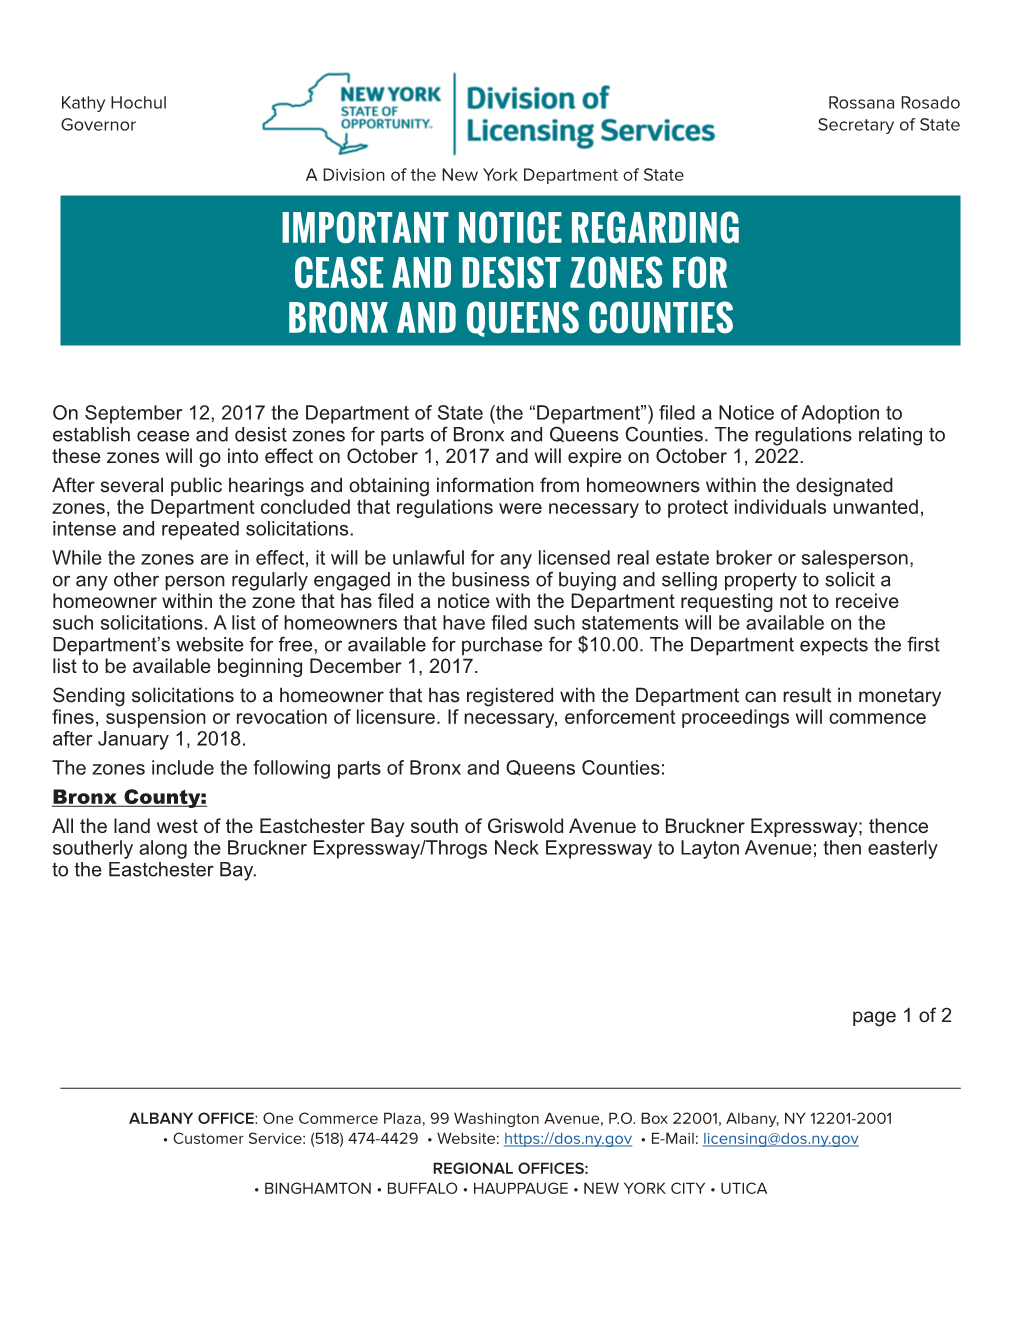 Important Notice Regarding Cease and Desist Zones for Bronx and Queens Counties